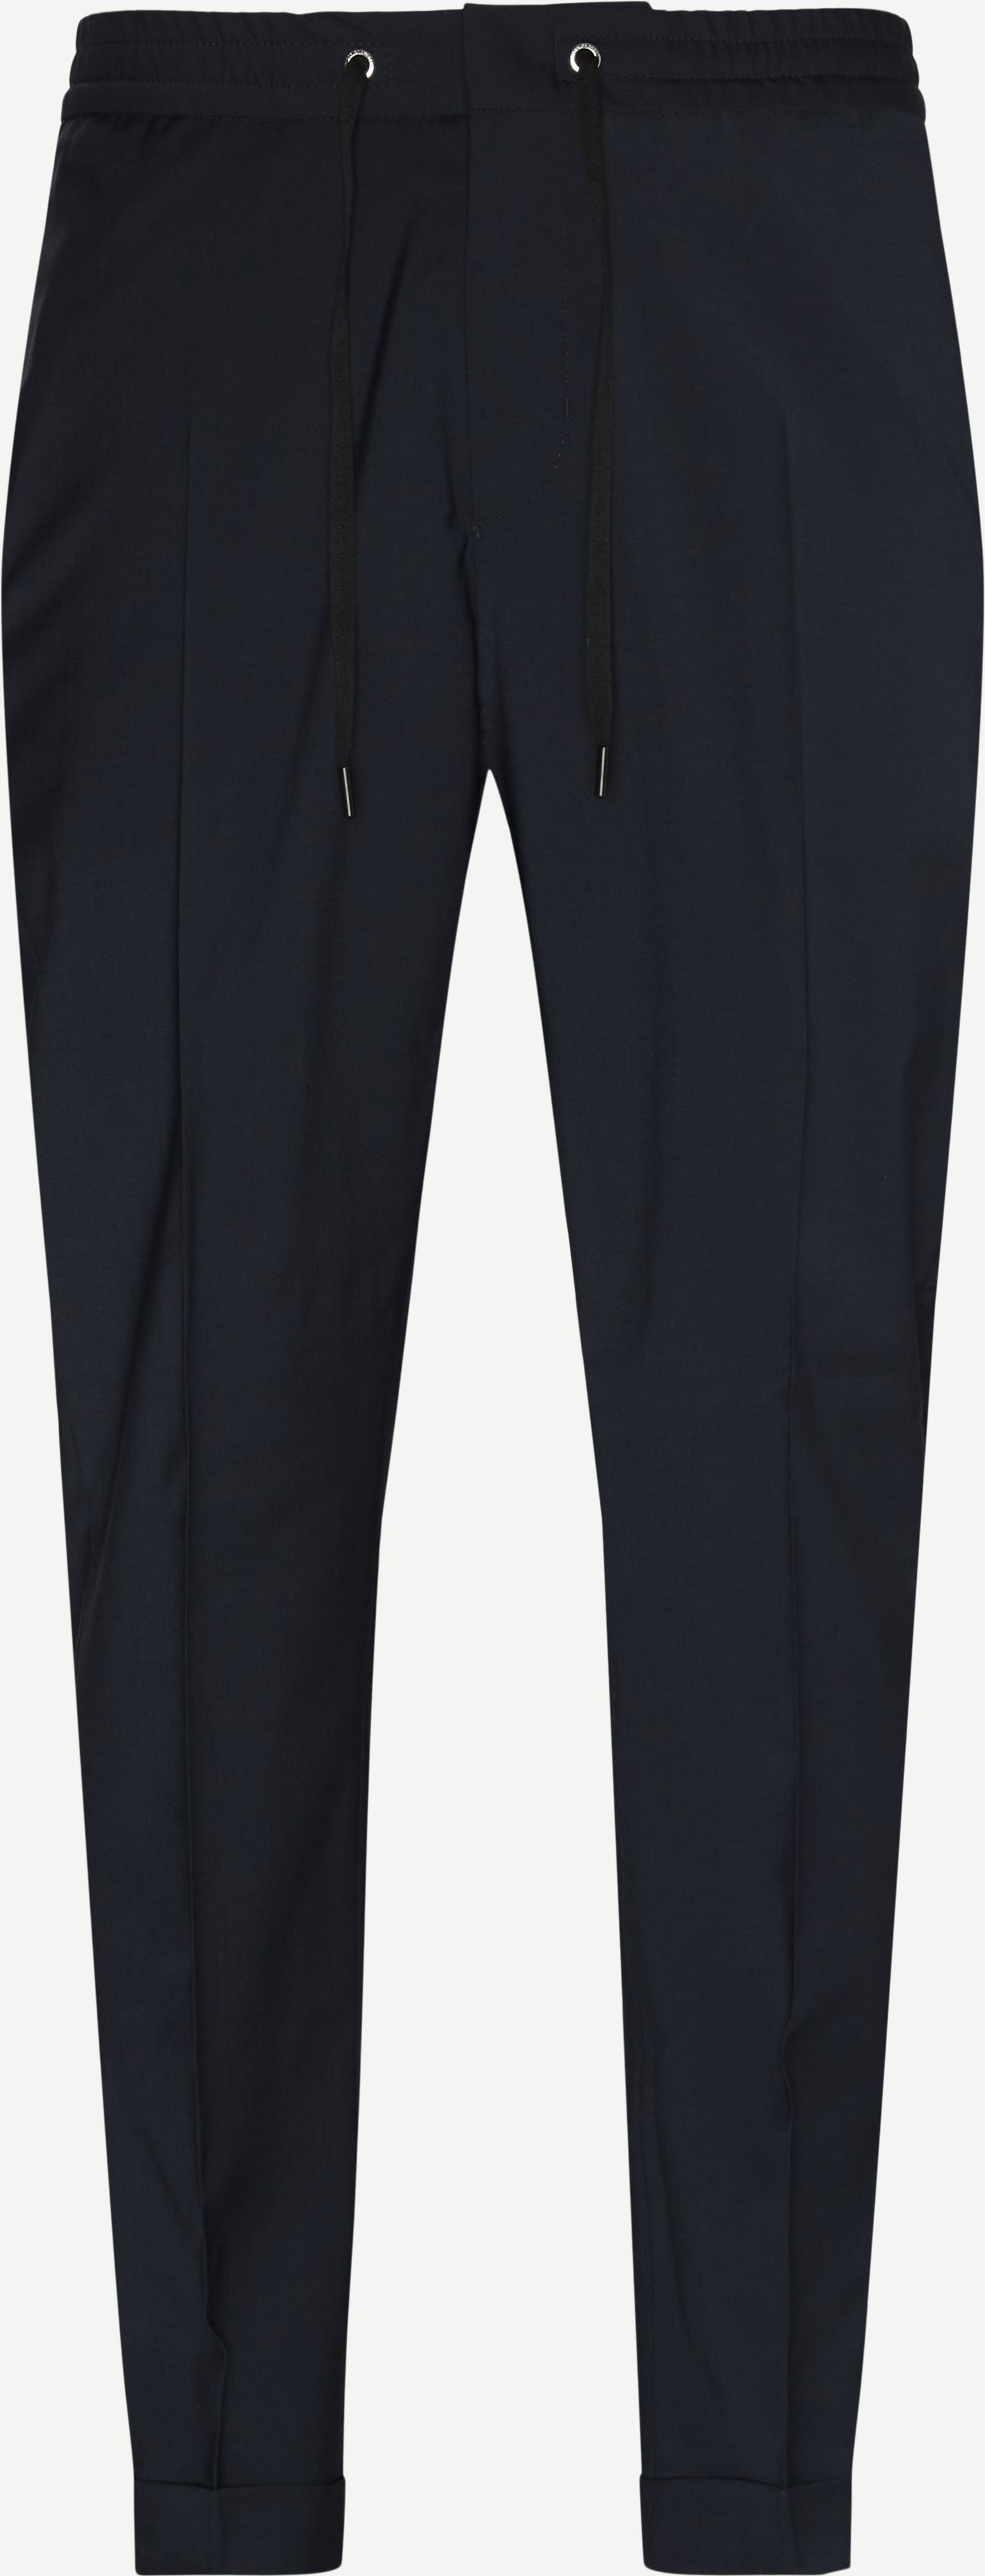 Travin Pants - Bukser - Regular fit - Blå